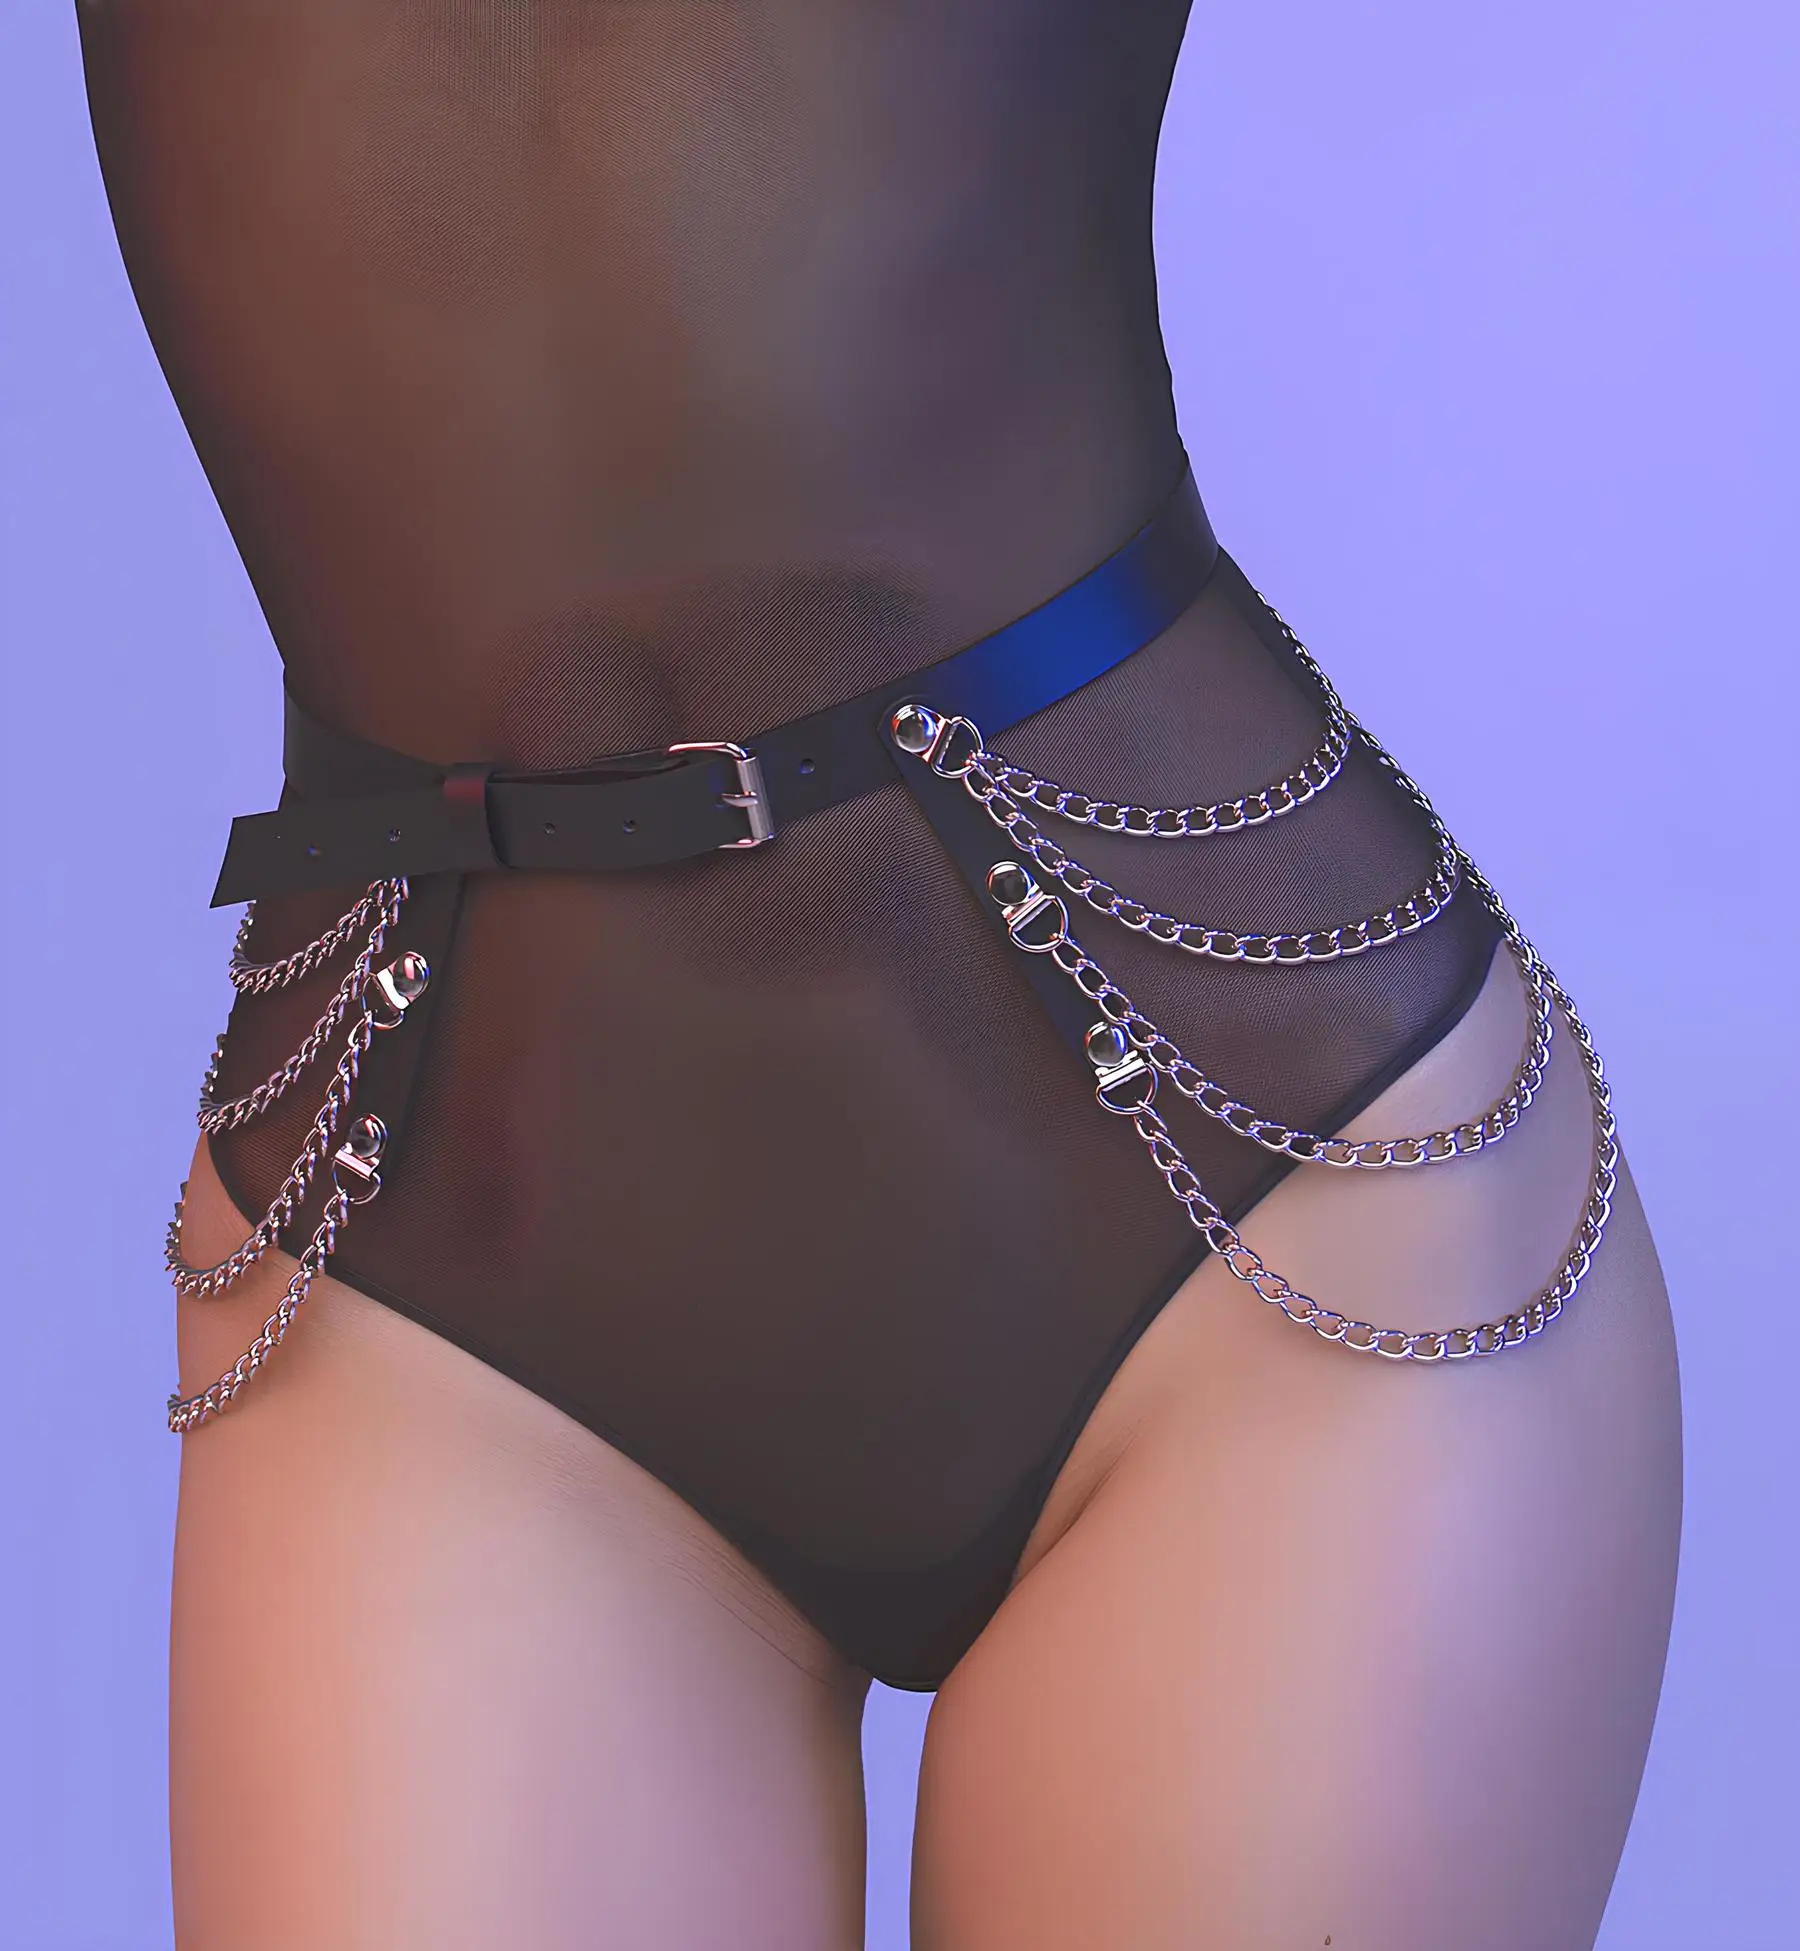 

Women Sexy Thigh Garter Belt Pu Leather Chain Leg Harness Bdsm Bondage Lingerie Gothic Fetish Clothing Exotic Accessorie